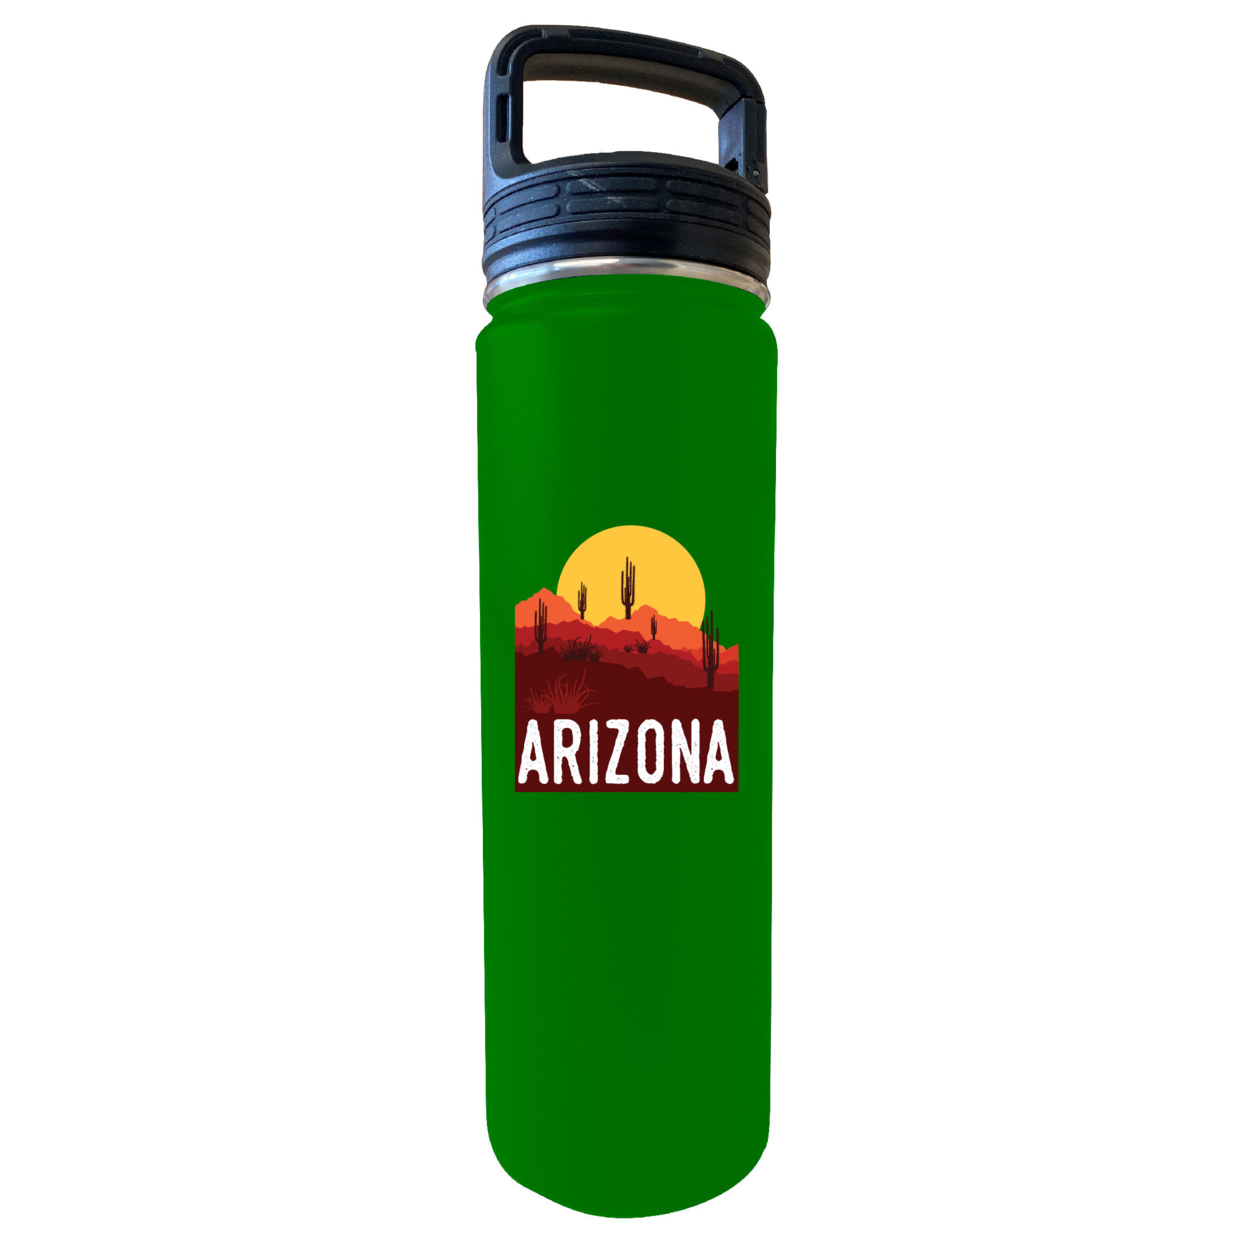 Arizona Souvenir Desert 32 Oz Engraved Insulated Double Wall Stainless Steel Water Bottle Tumbler - White